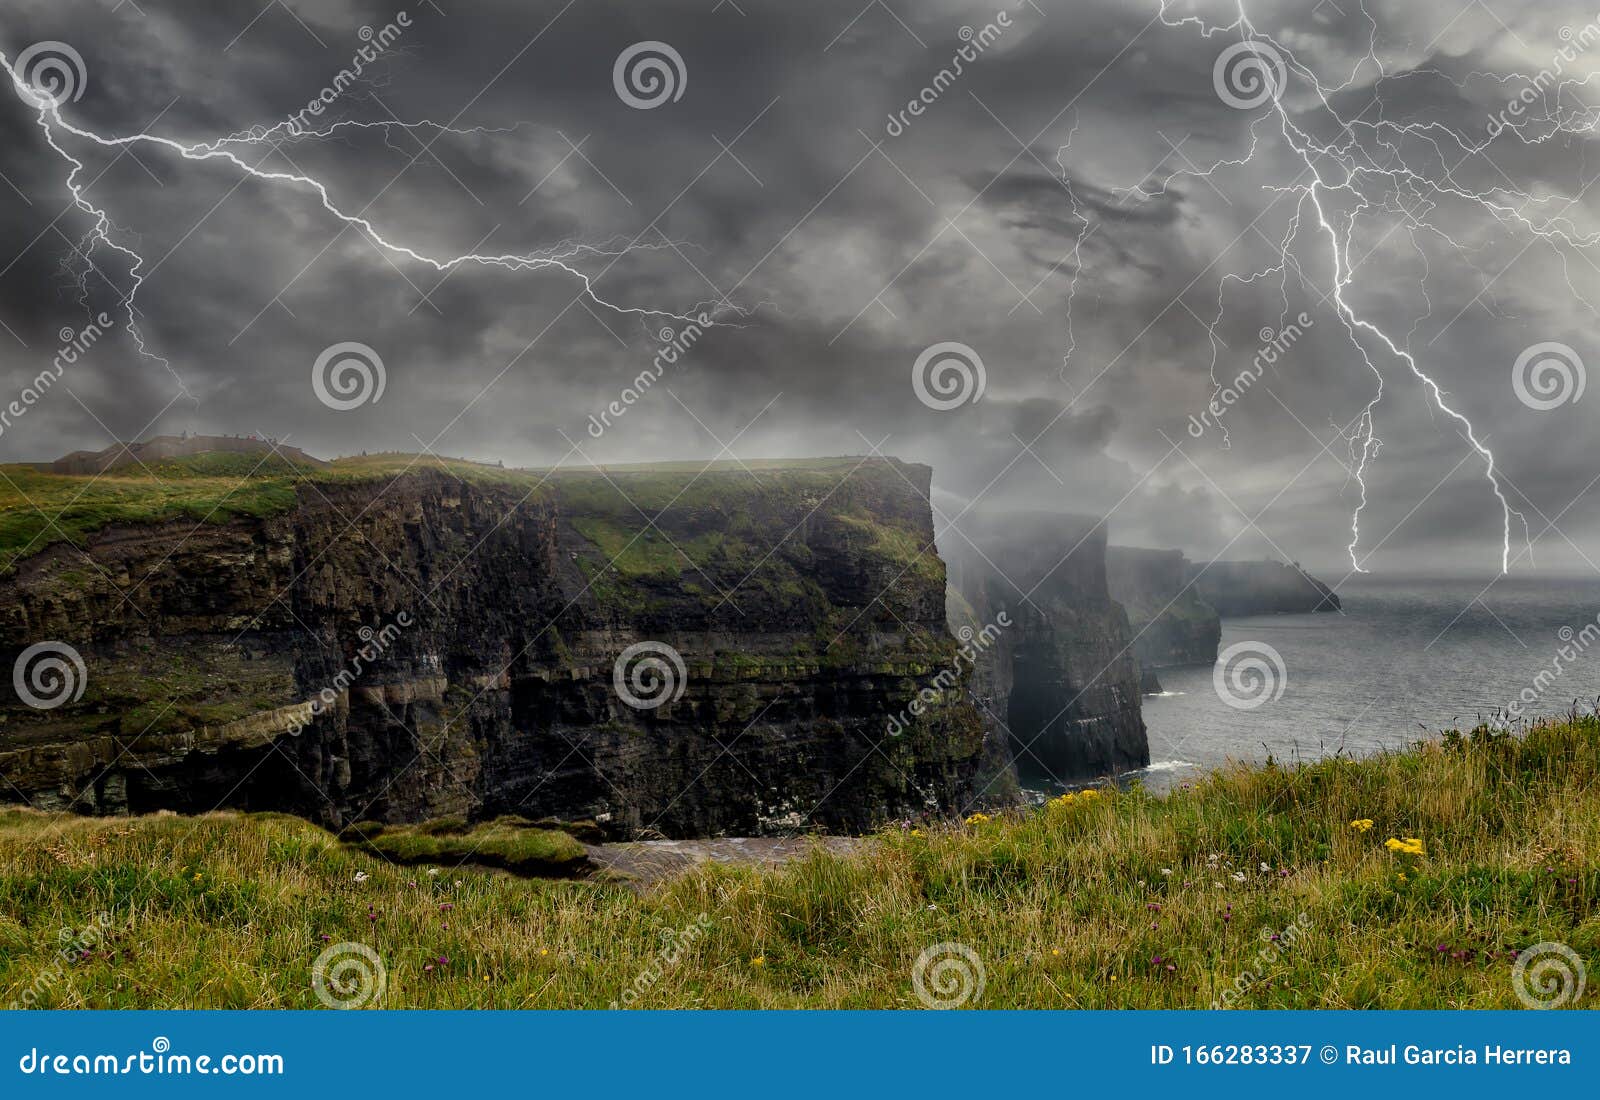 spectacular lightning storm in cliffs of moher. ireland`s coast